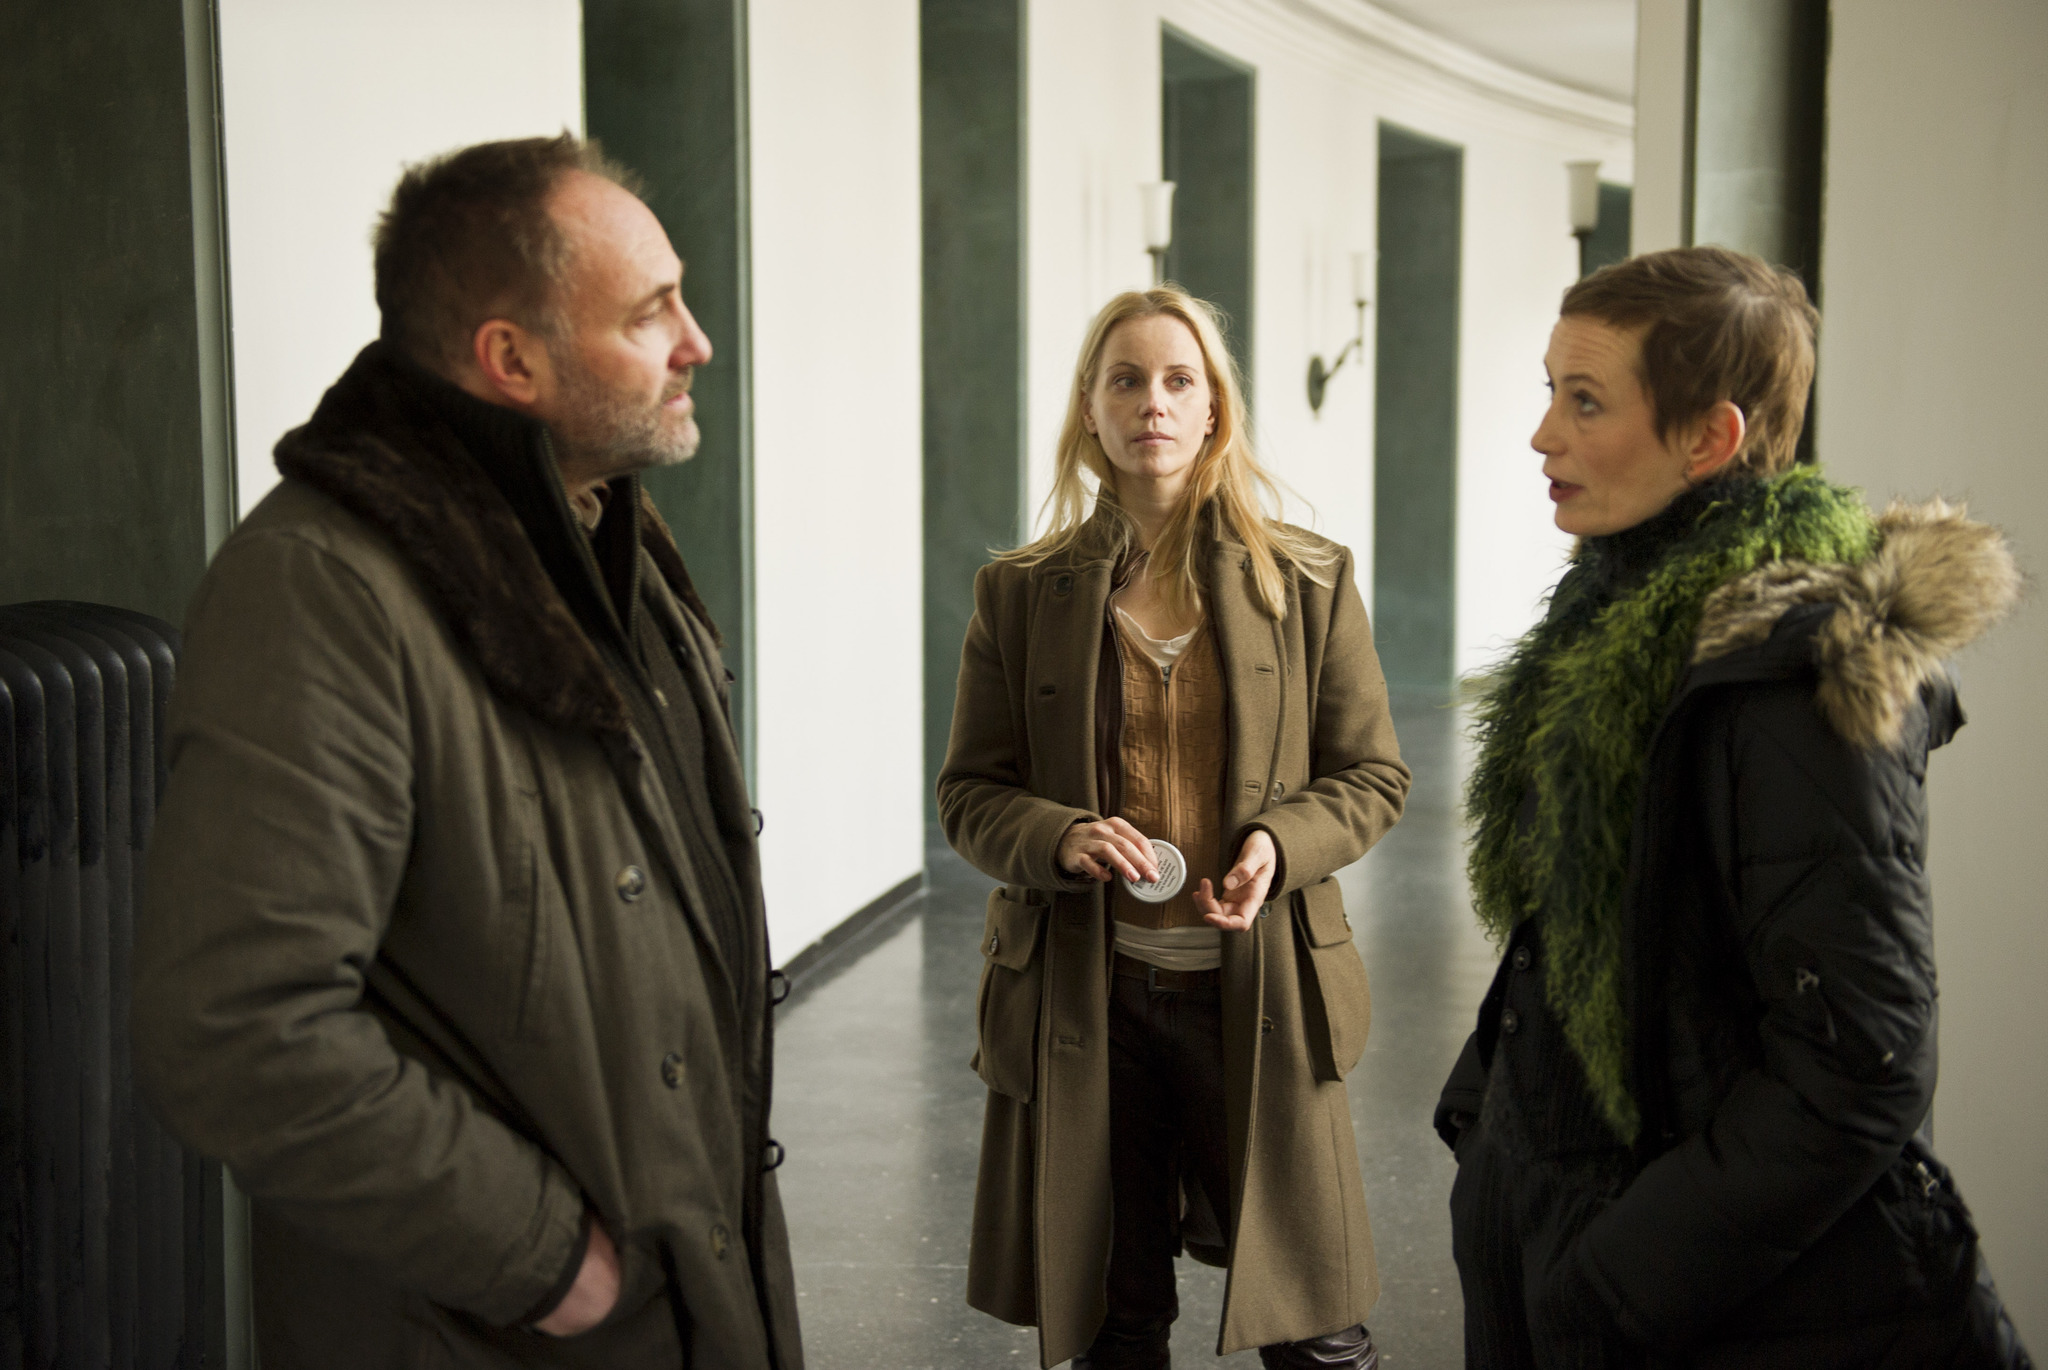 Still of Sarah Boberg, Kim Bodnia and Sofia Helin in Bron/Broen (2011)